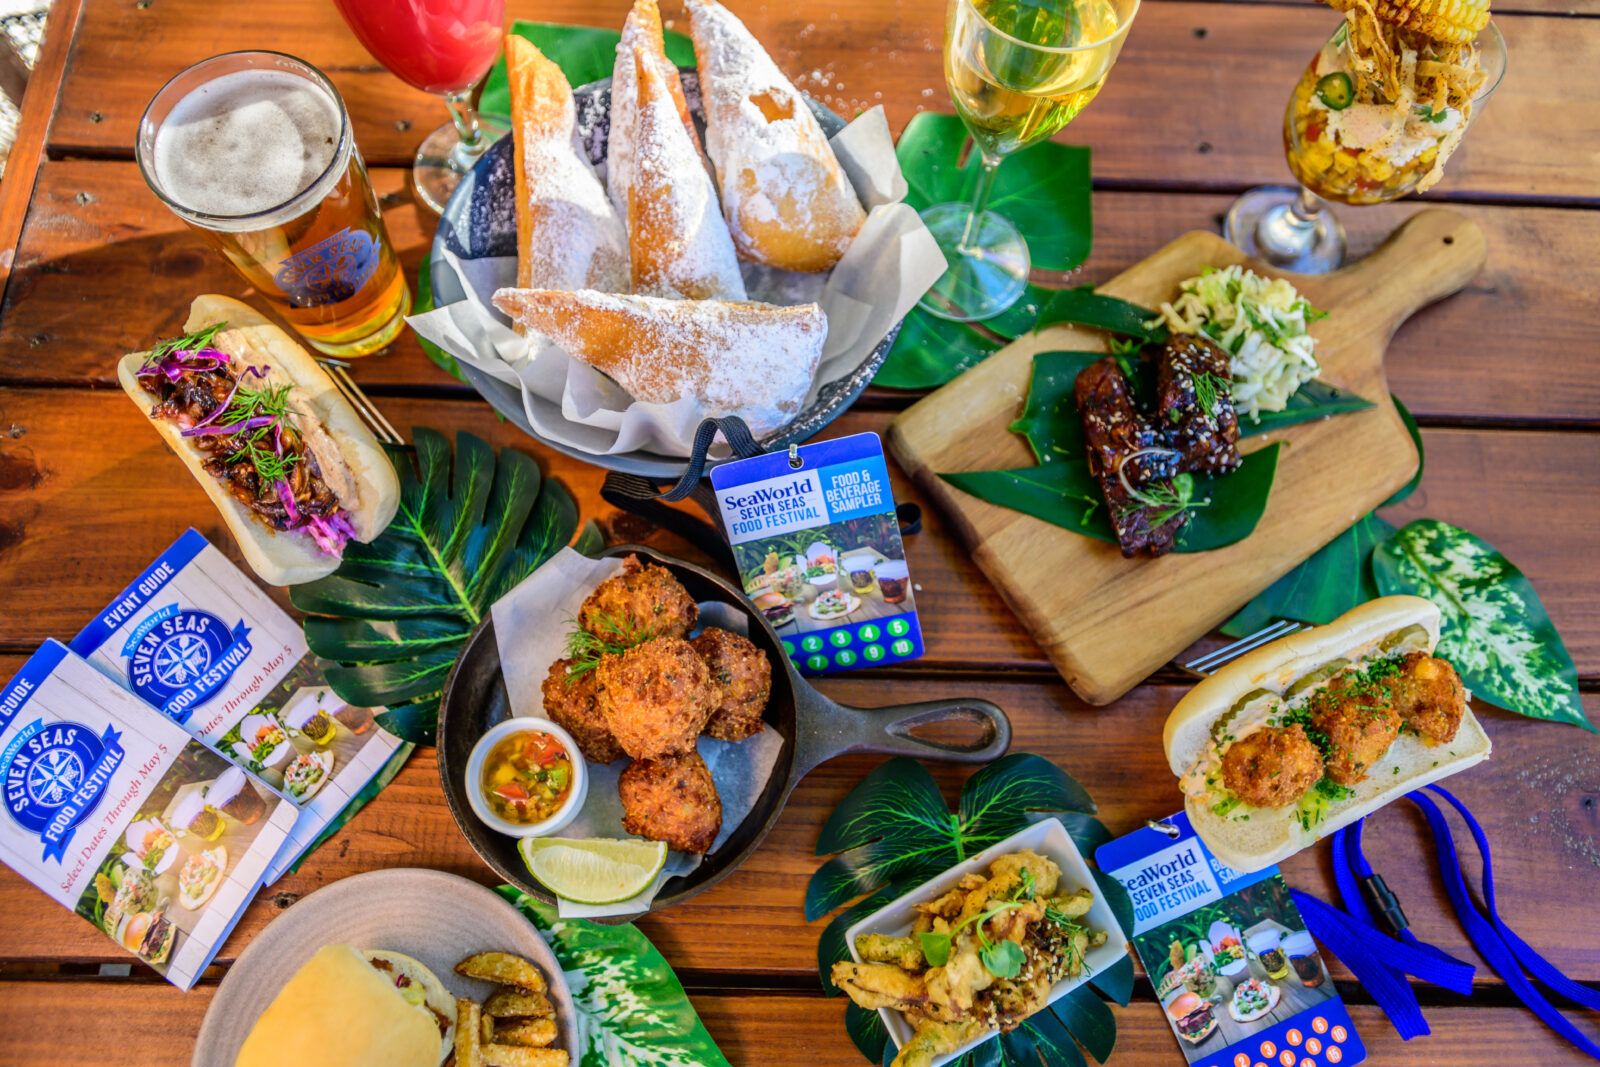 SeaWorld Orlando Seven Seas Food Festival 2021